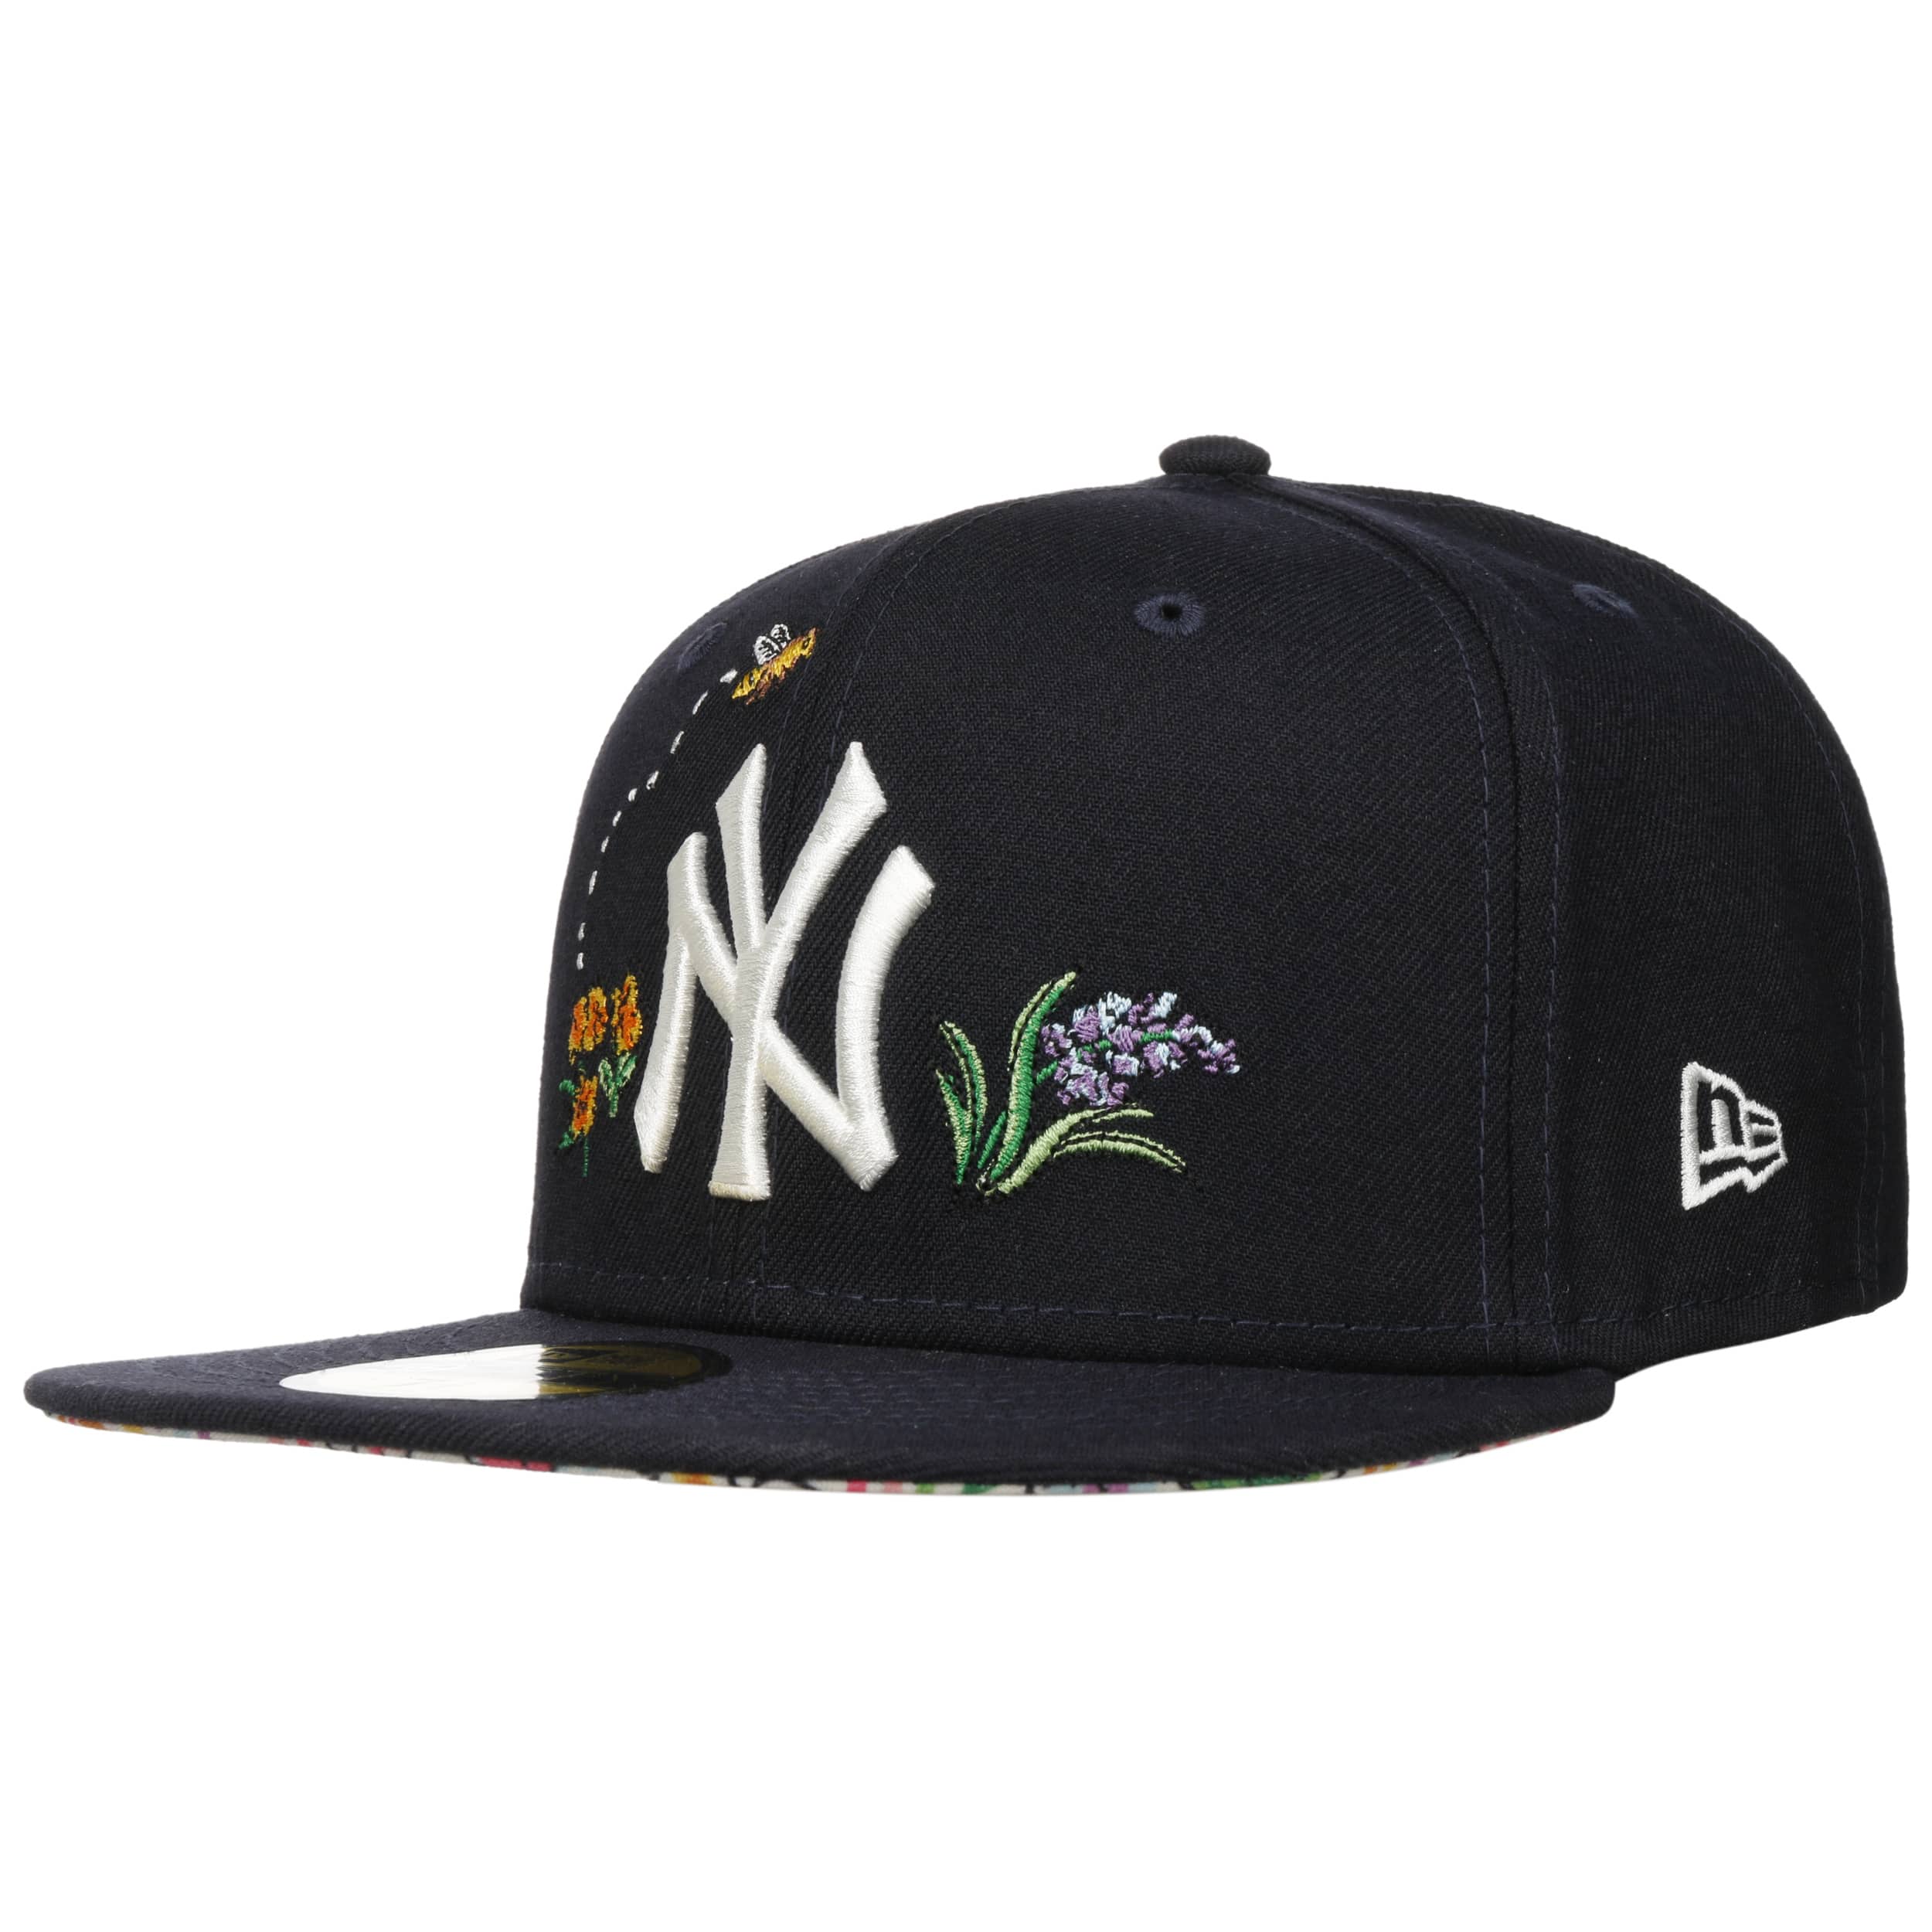 How each New Era Team Describe MLB hat represents the city